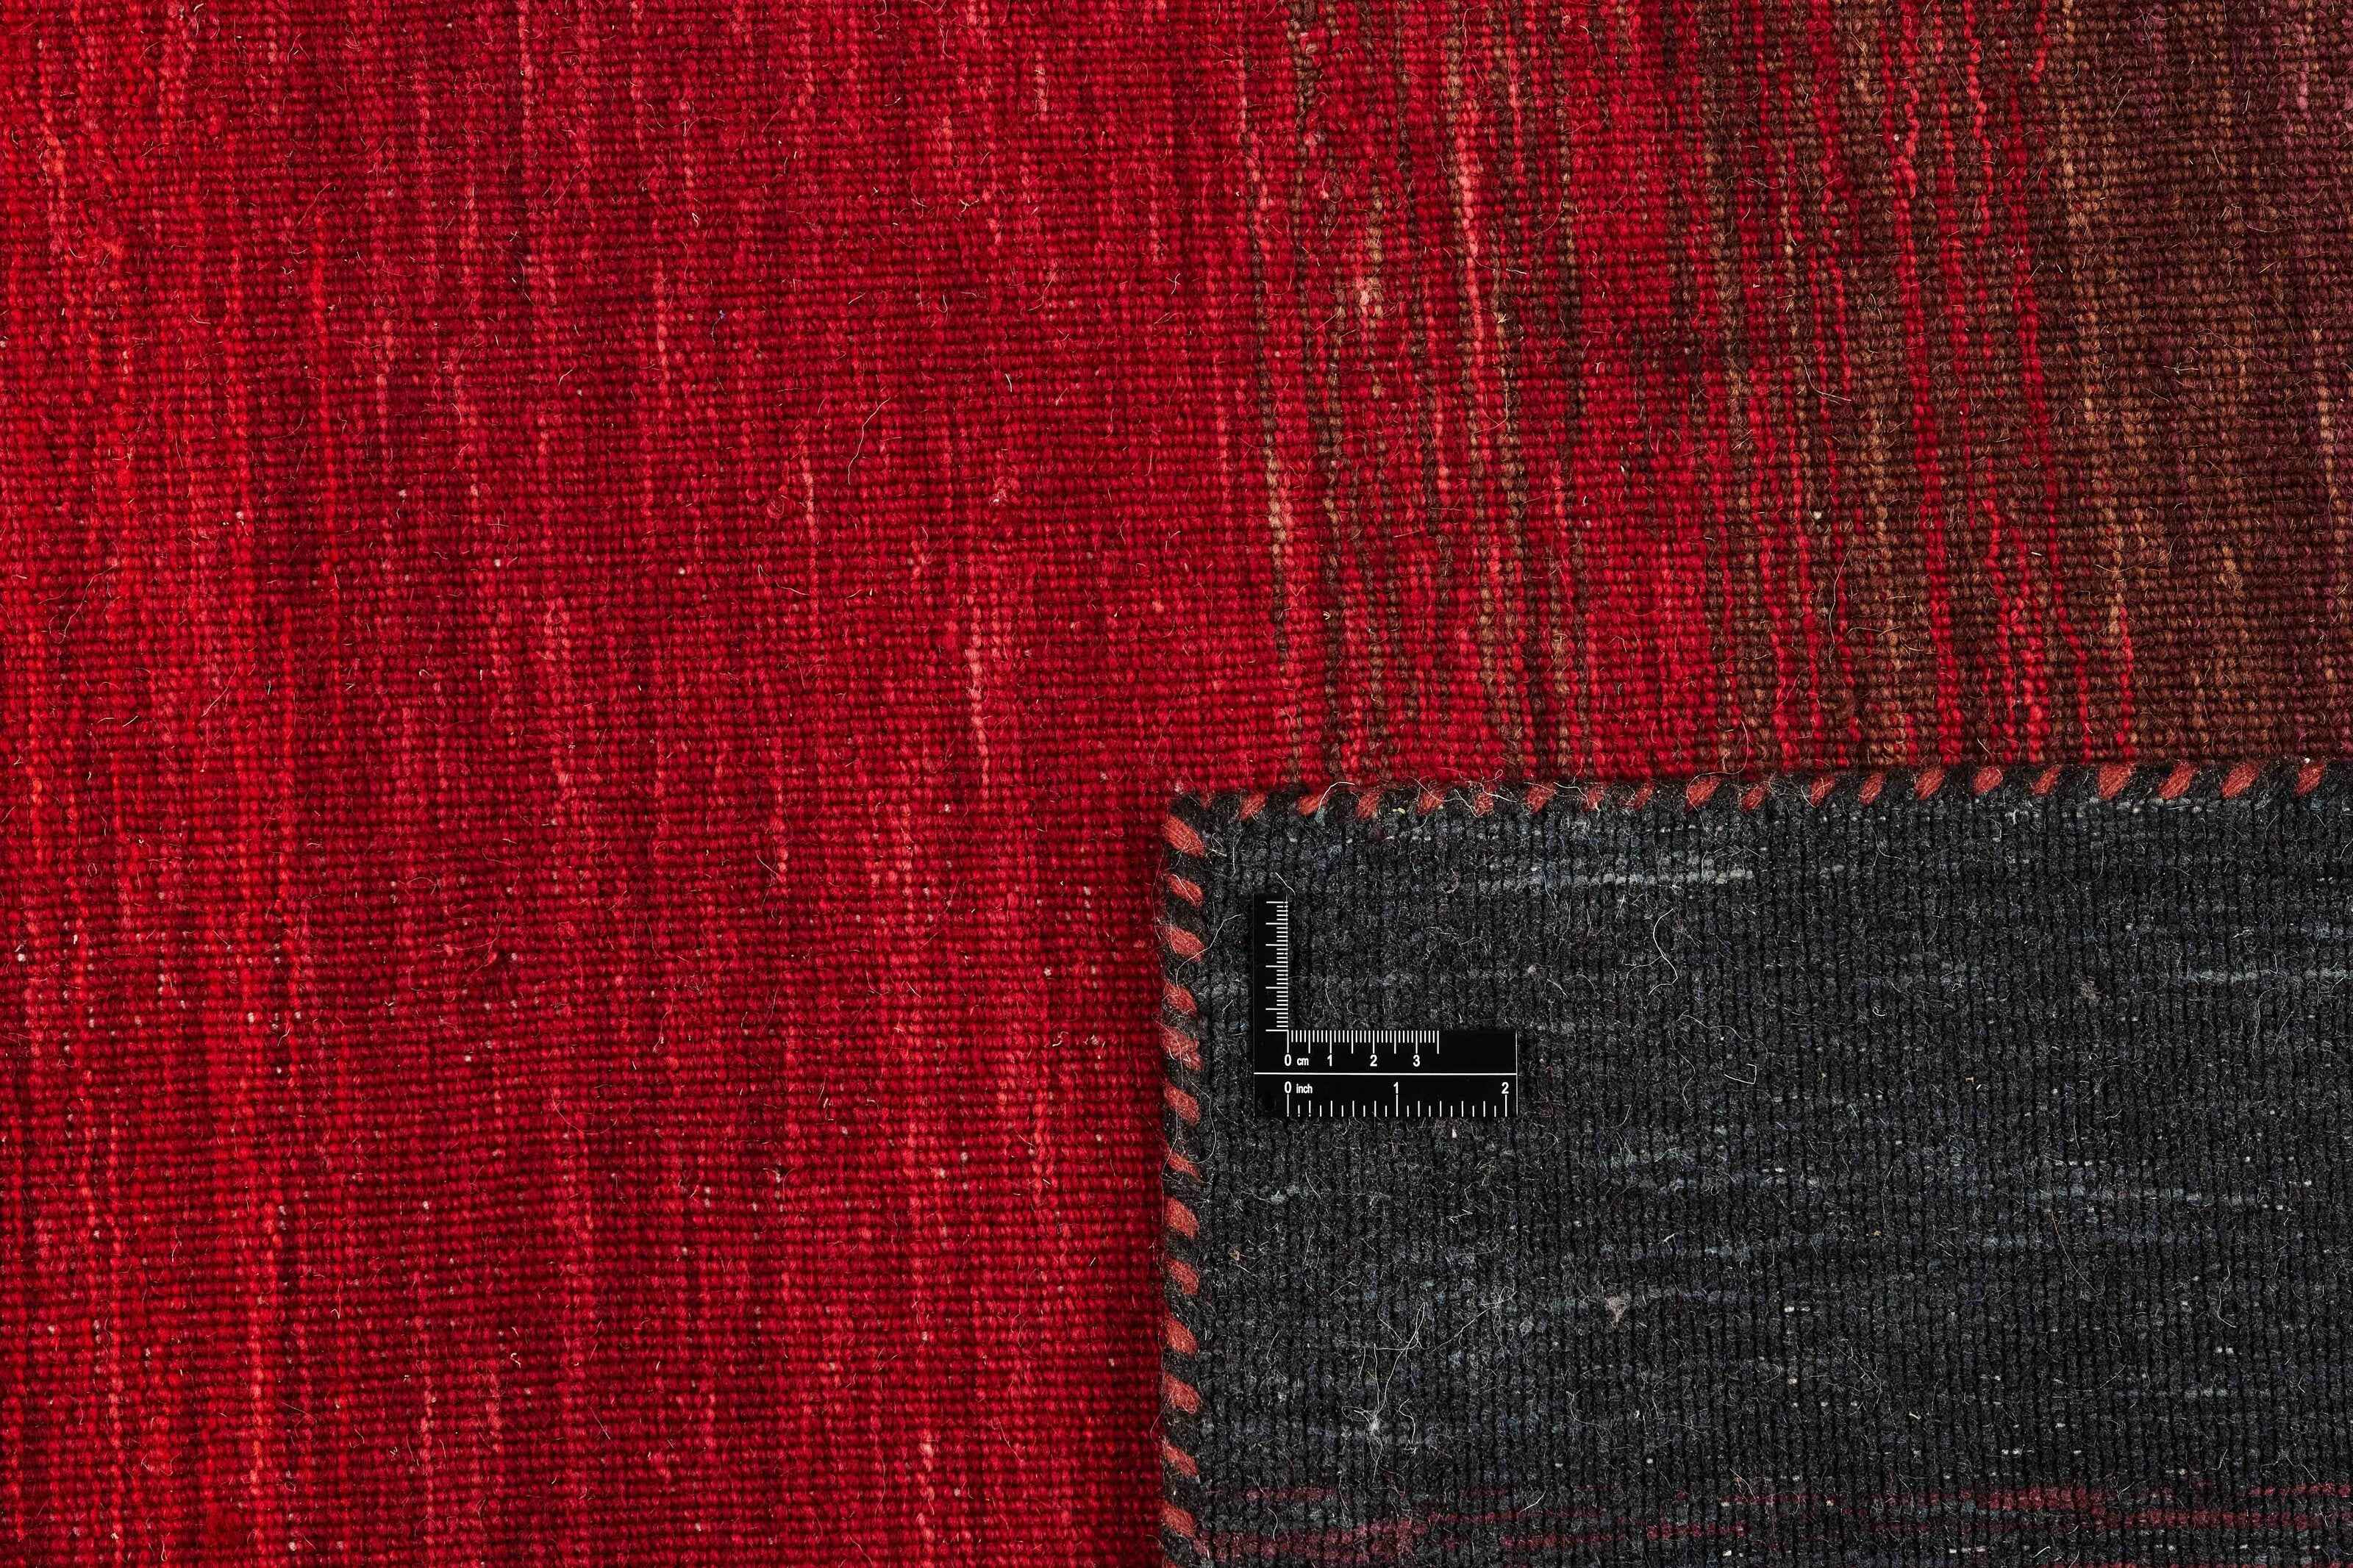 240x240 cm Indian Wool Multicolor Rug-HLD180805, Black Terra - Rugmaster